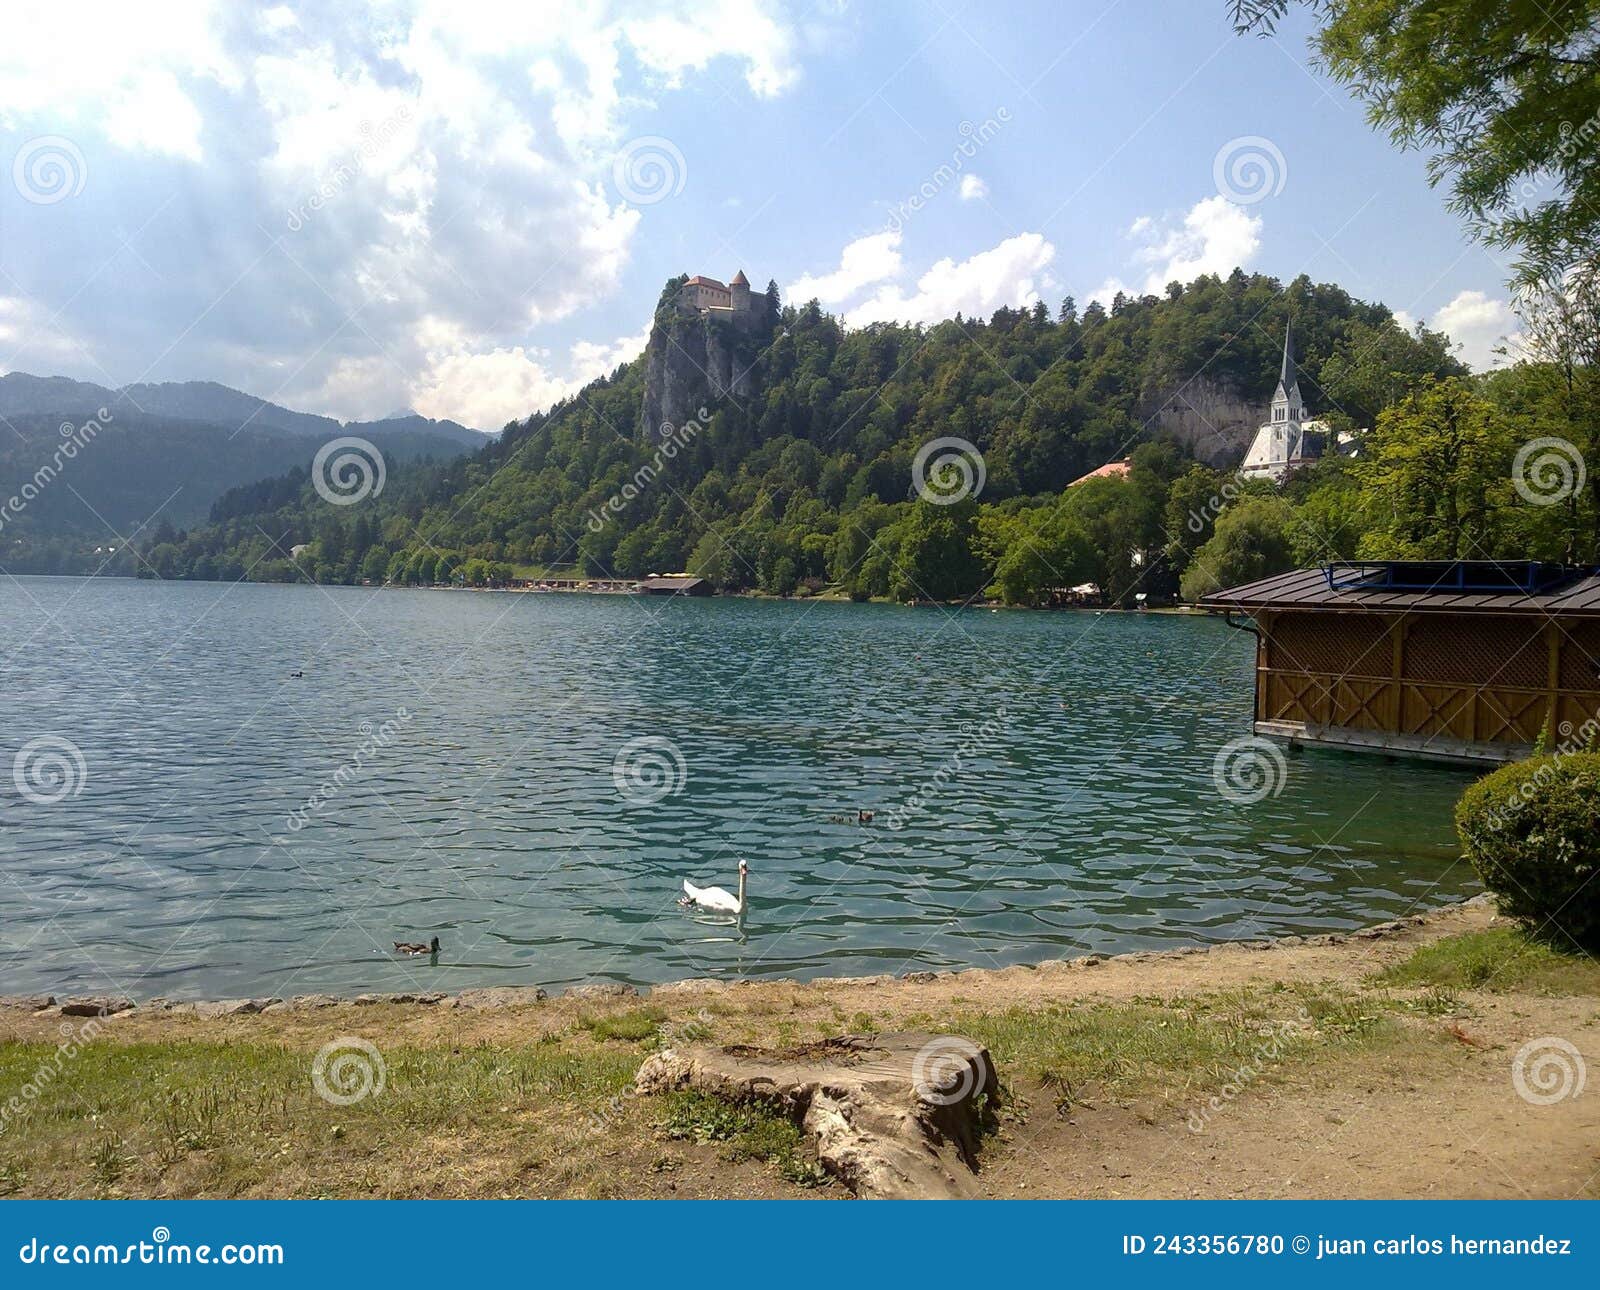 blescko jezero, eslovenia